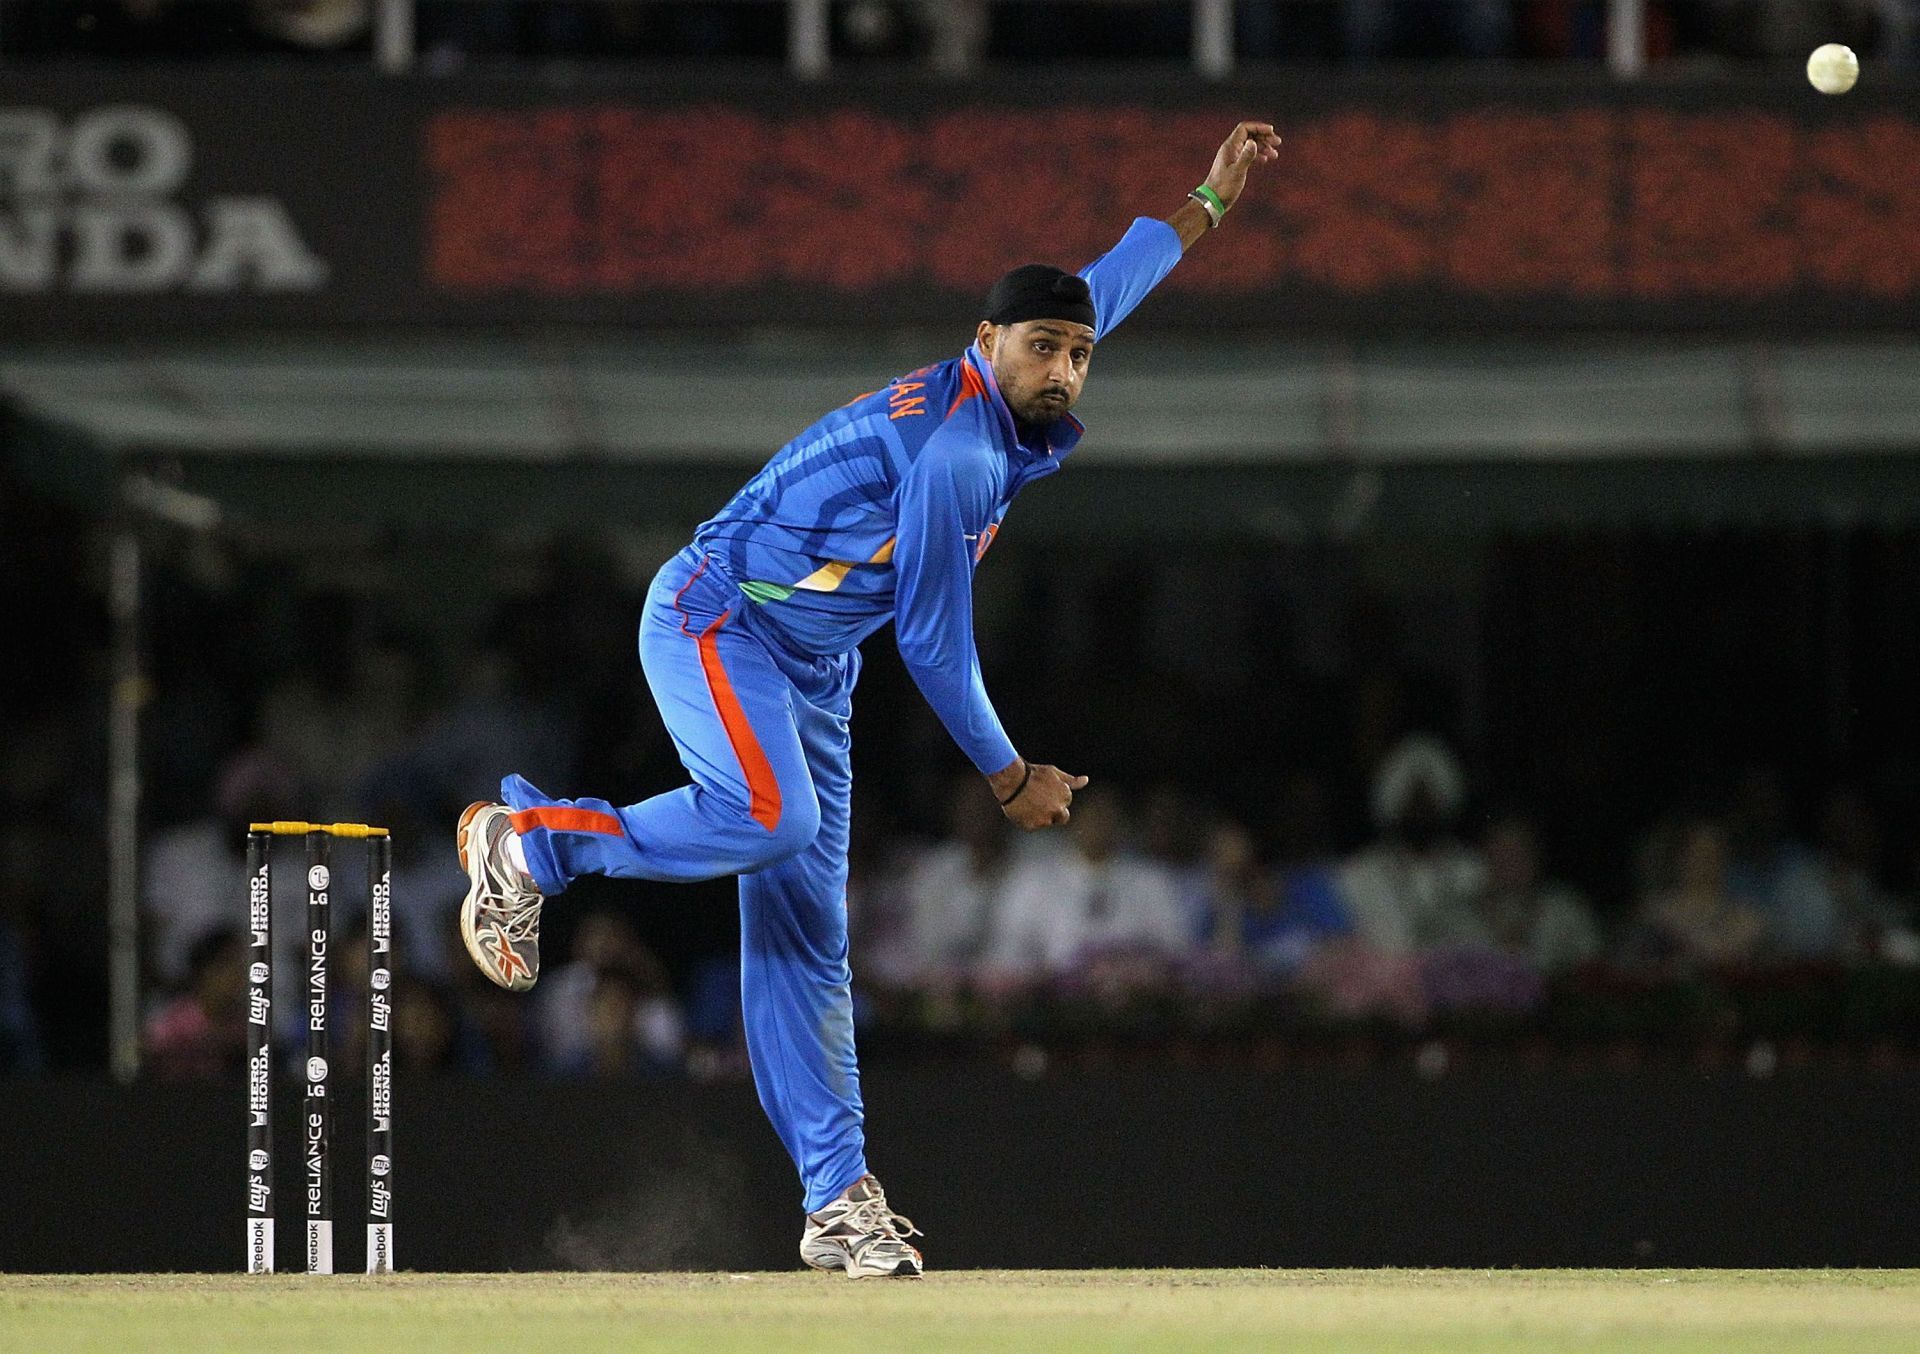 Harbhajan Singh played his last ODI in October 2015.